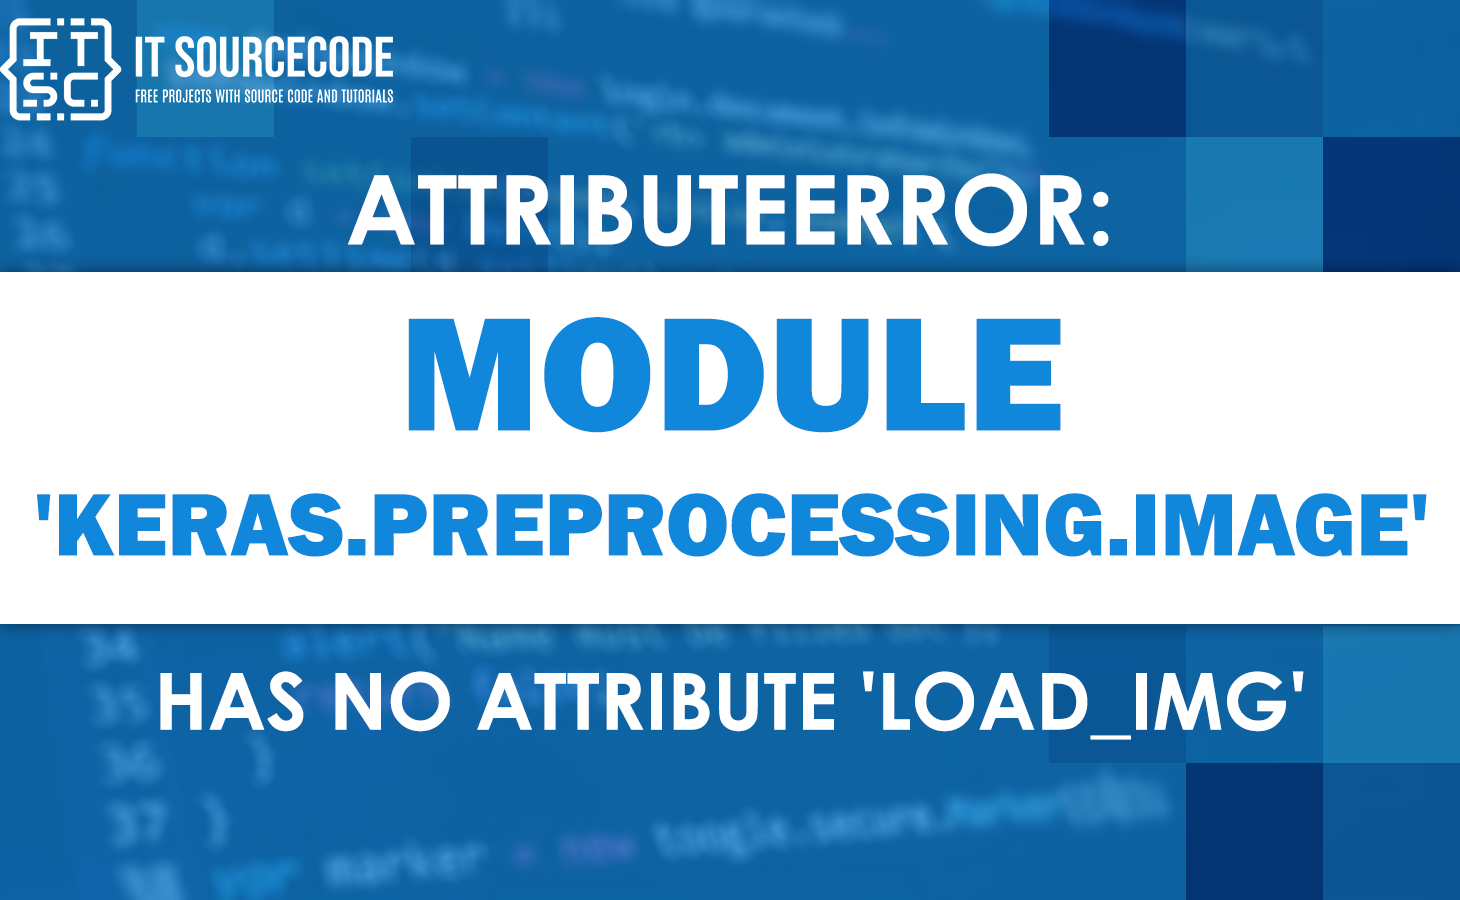 attributeerror: module keras preprocessing image has no attribute load img